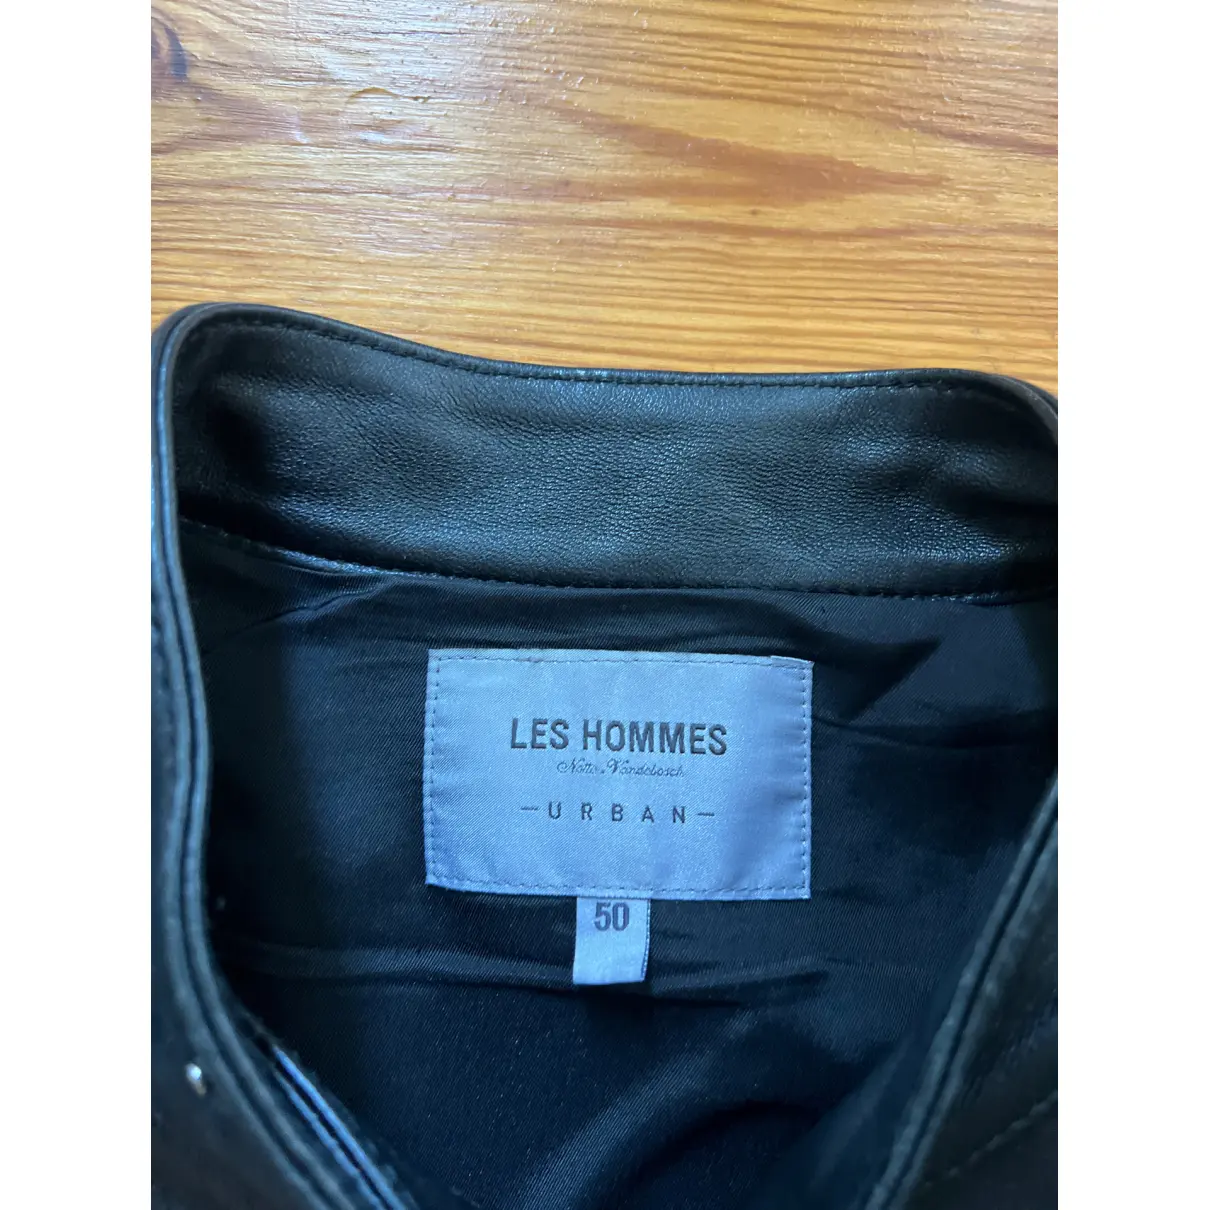 Buy Les Hommes Leather vest online